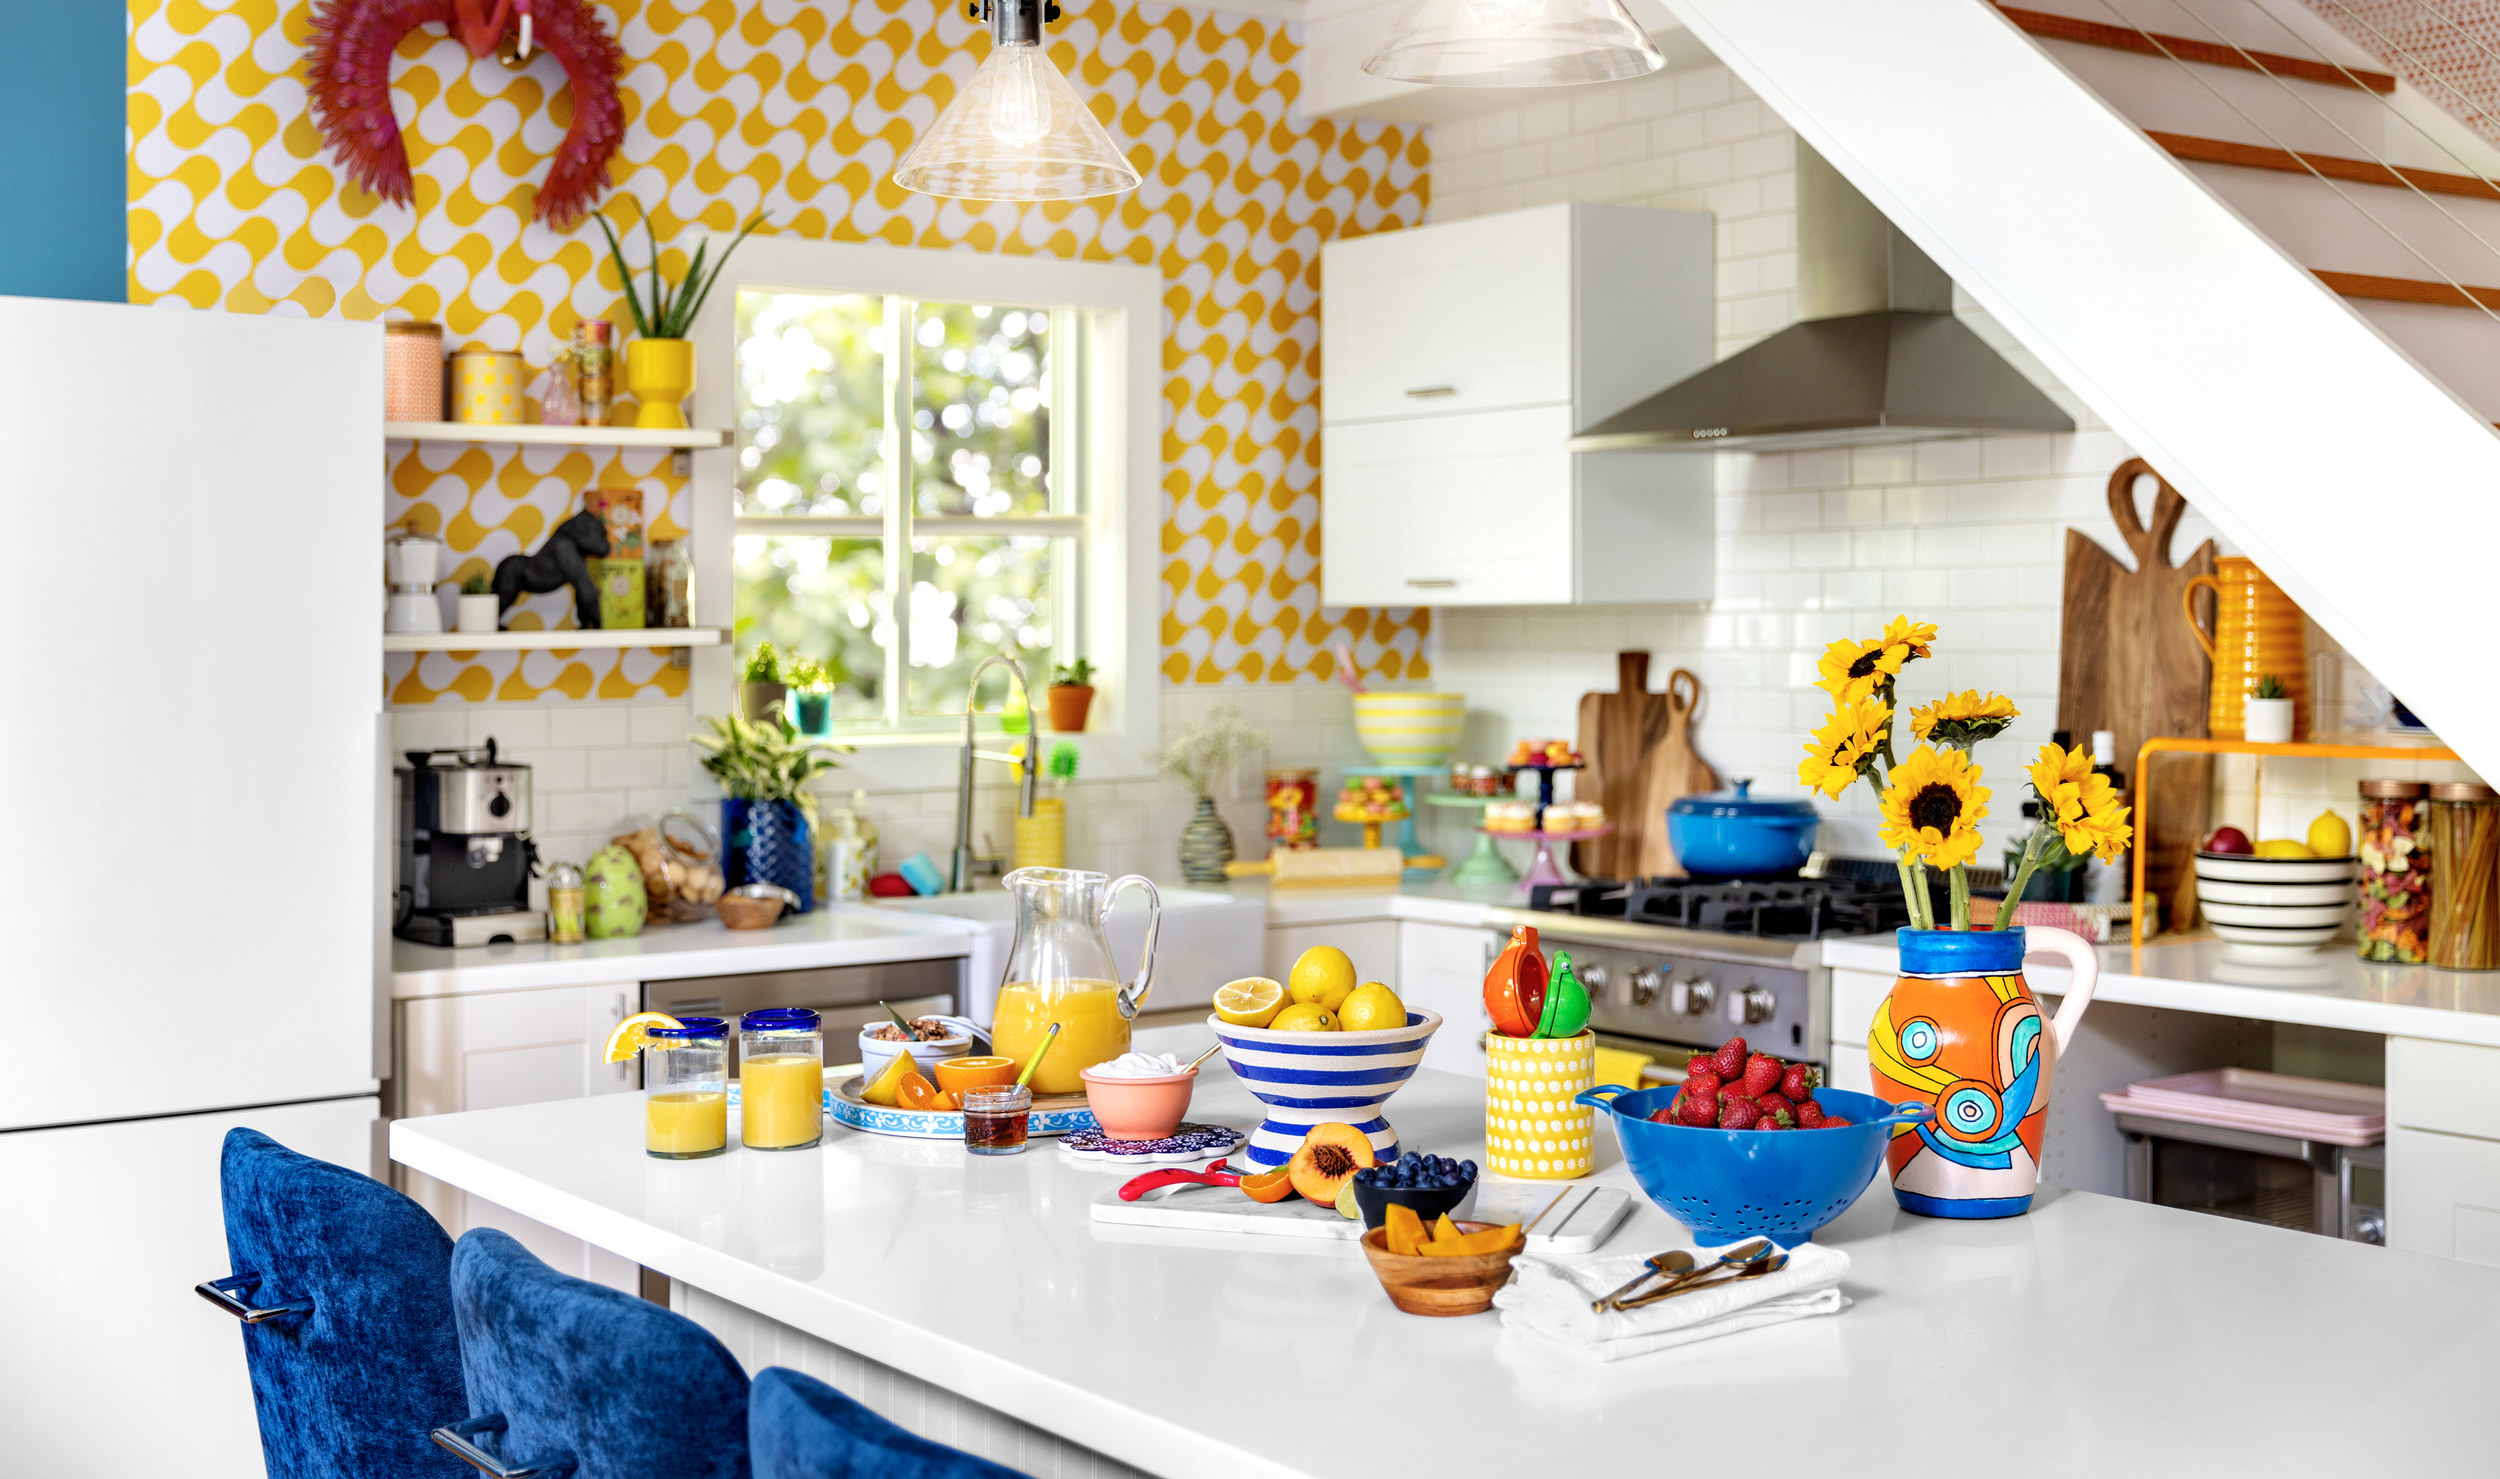 Kitchen with sunflowers, orange juice, lemons, and dishes on island